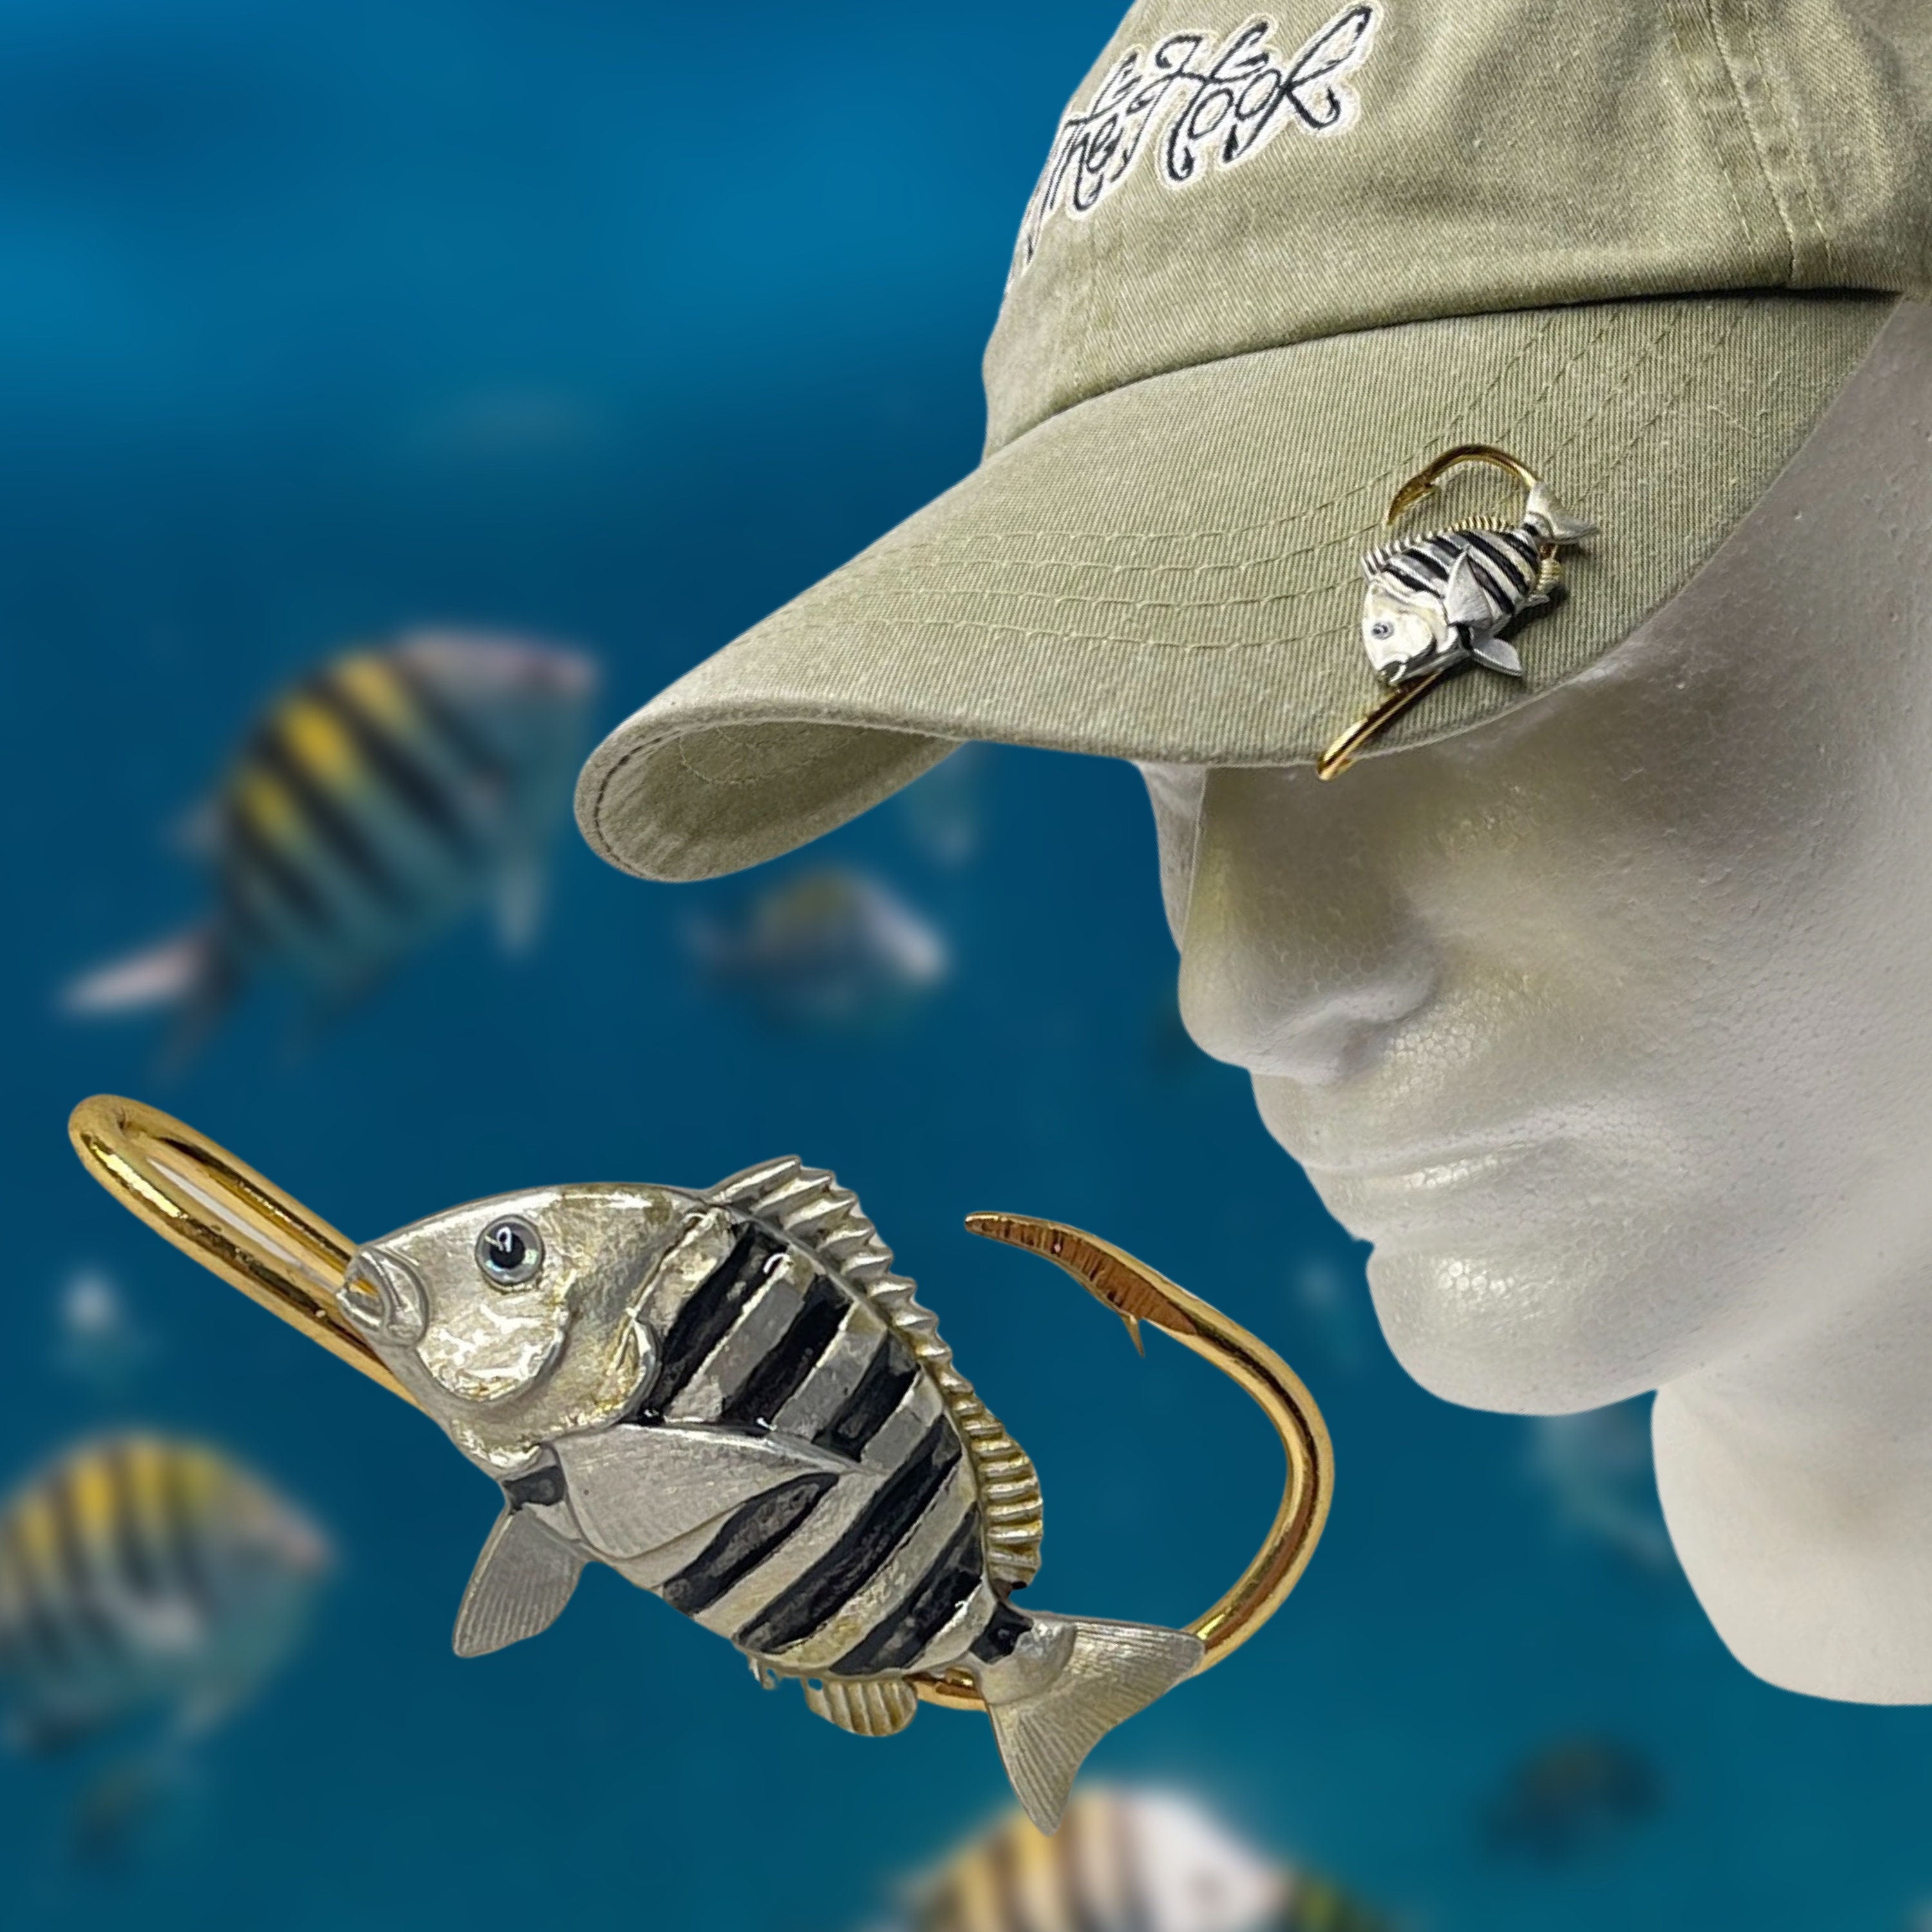 Sheepshead HOOKIT© Fishing Hook Hat Clip Fishing .. Fishing Hat Hook..  Fishing Brim Clip. Gift for Fisherman 